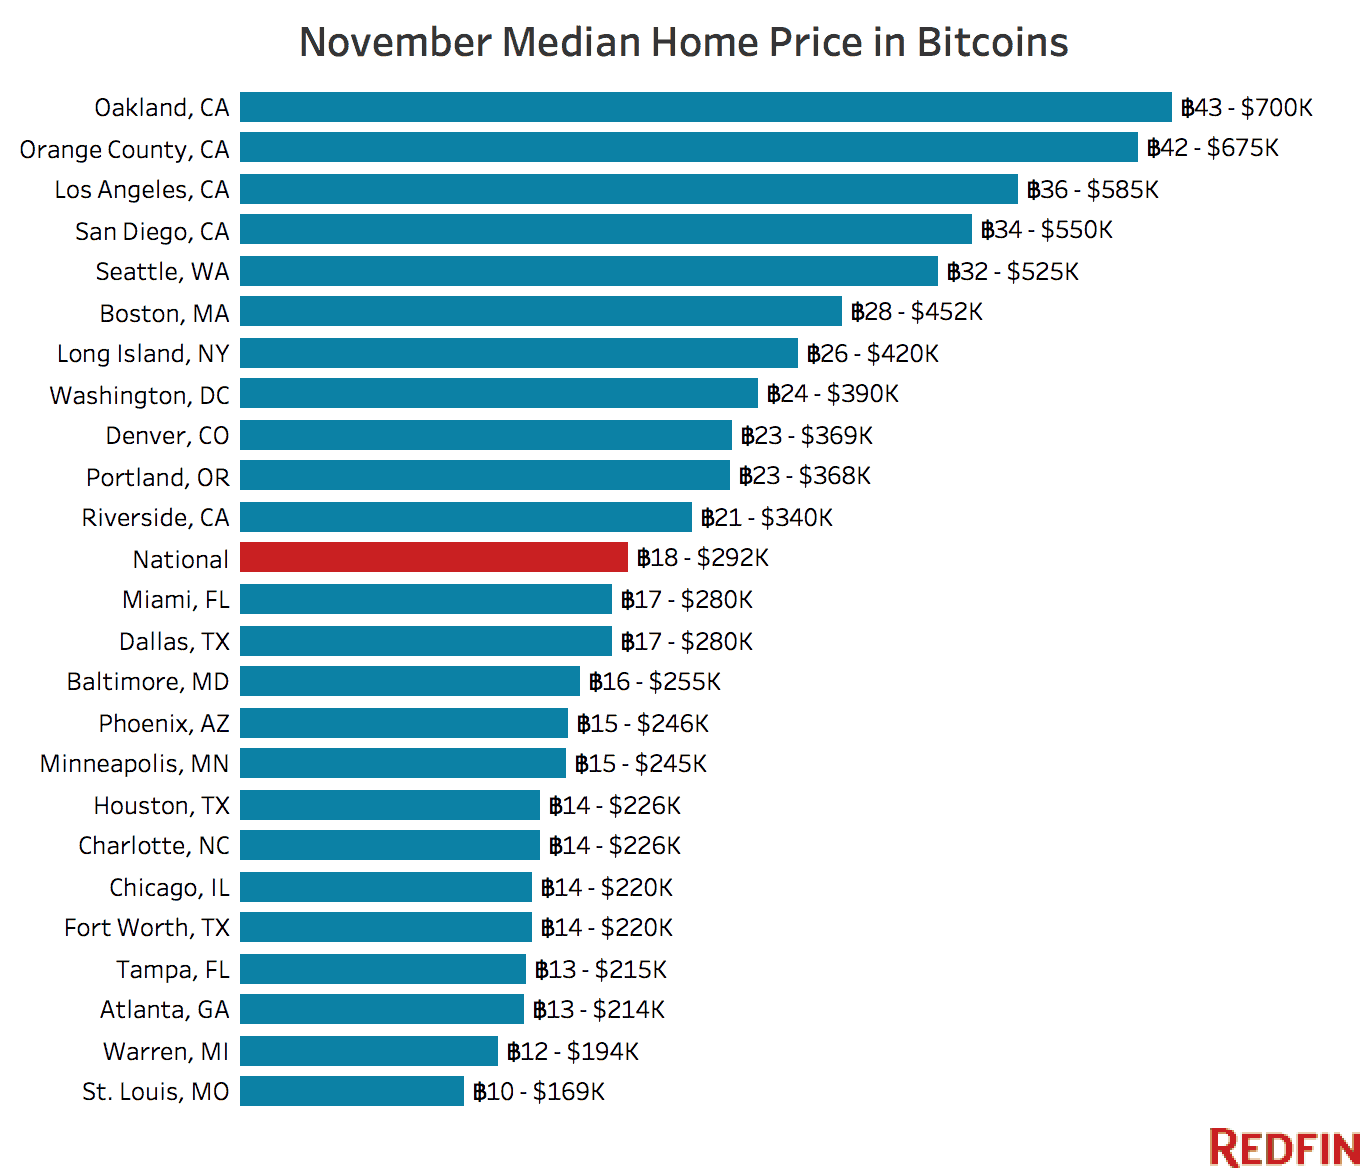 Latest Metro Prices in Bitcoins